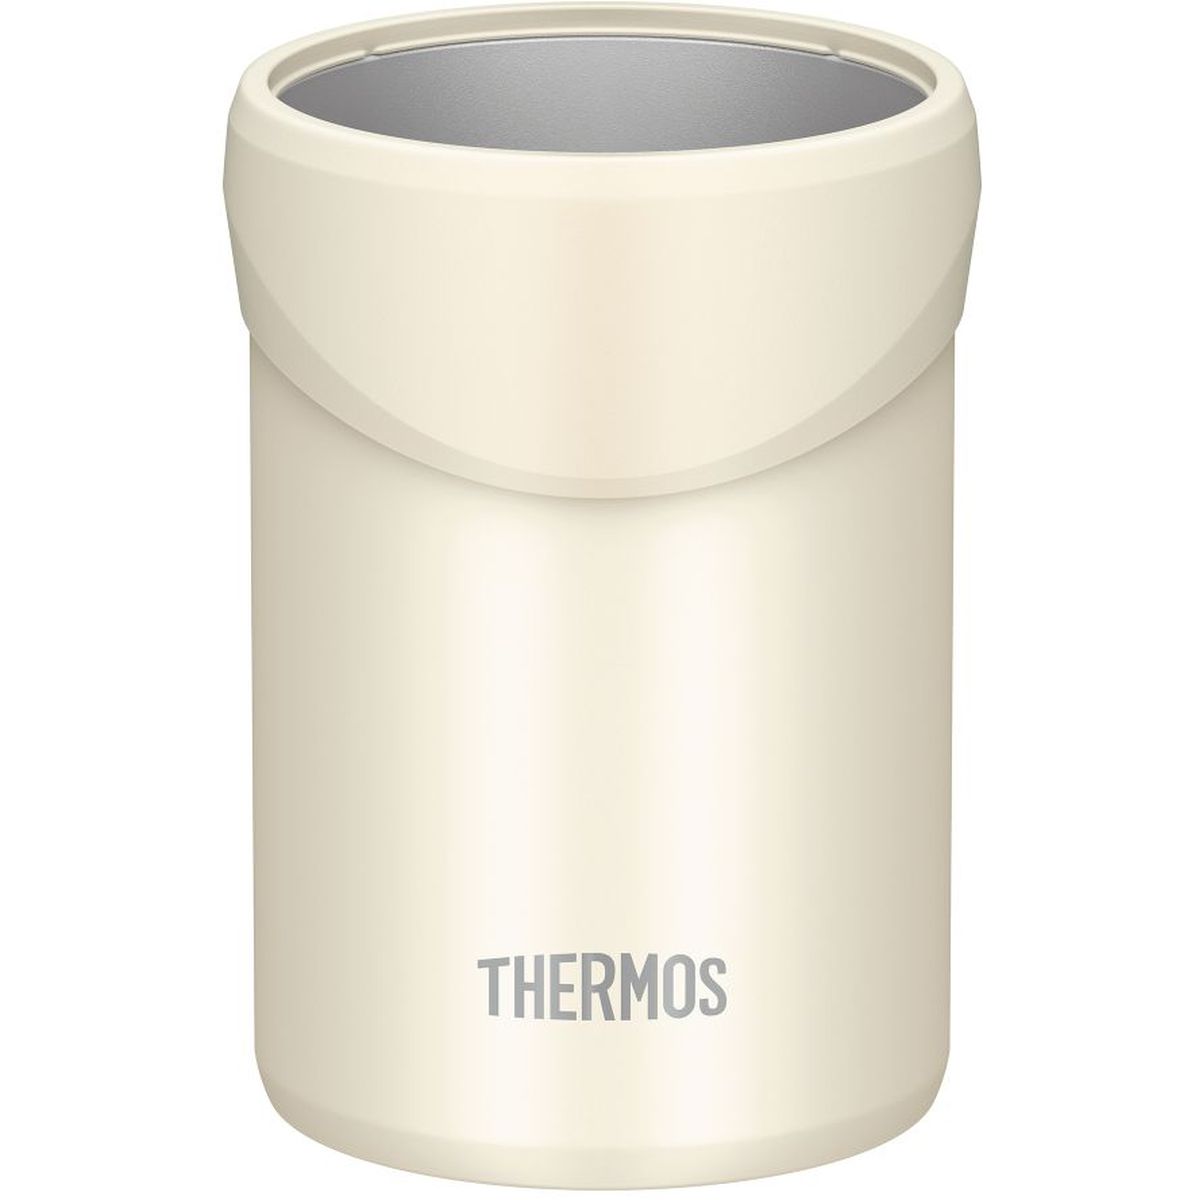 THERMOS 保冷缶ホルダー ホワイト 350・500mL缶対応 真空断熱 保温保冷